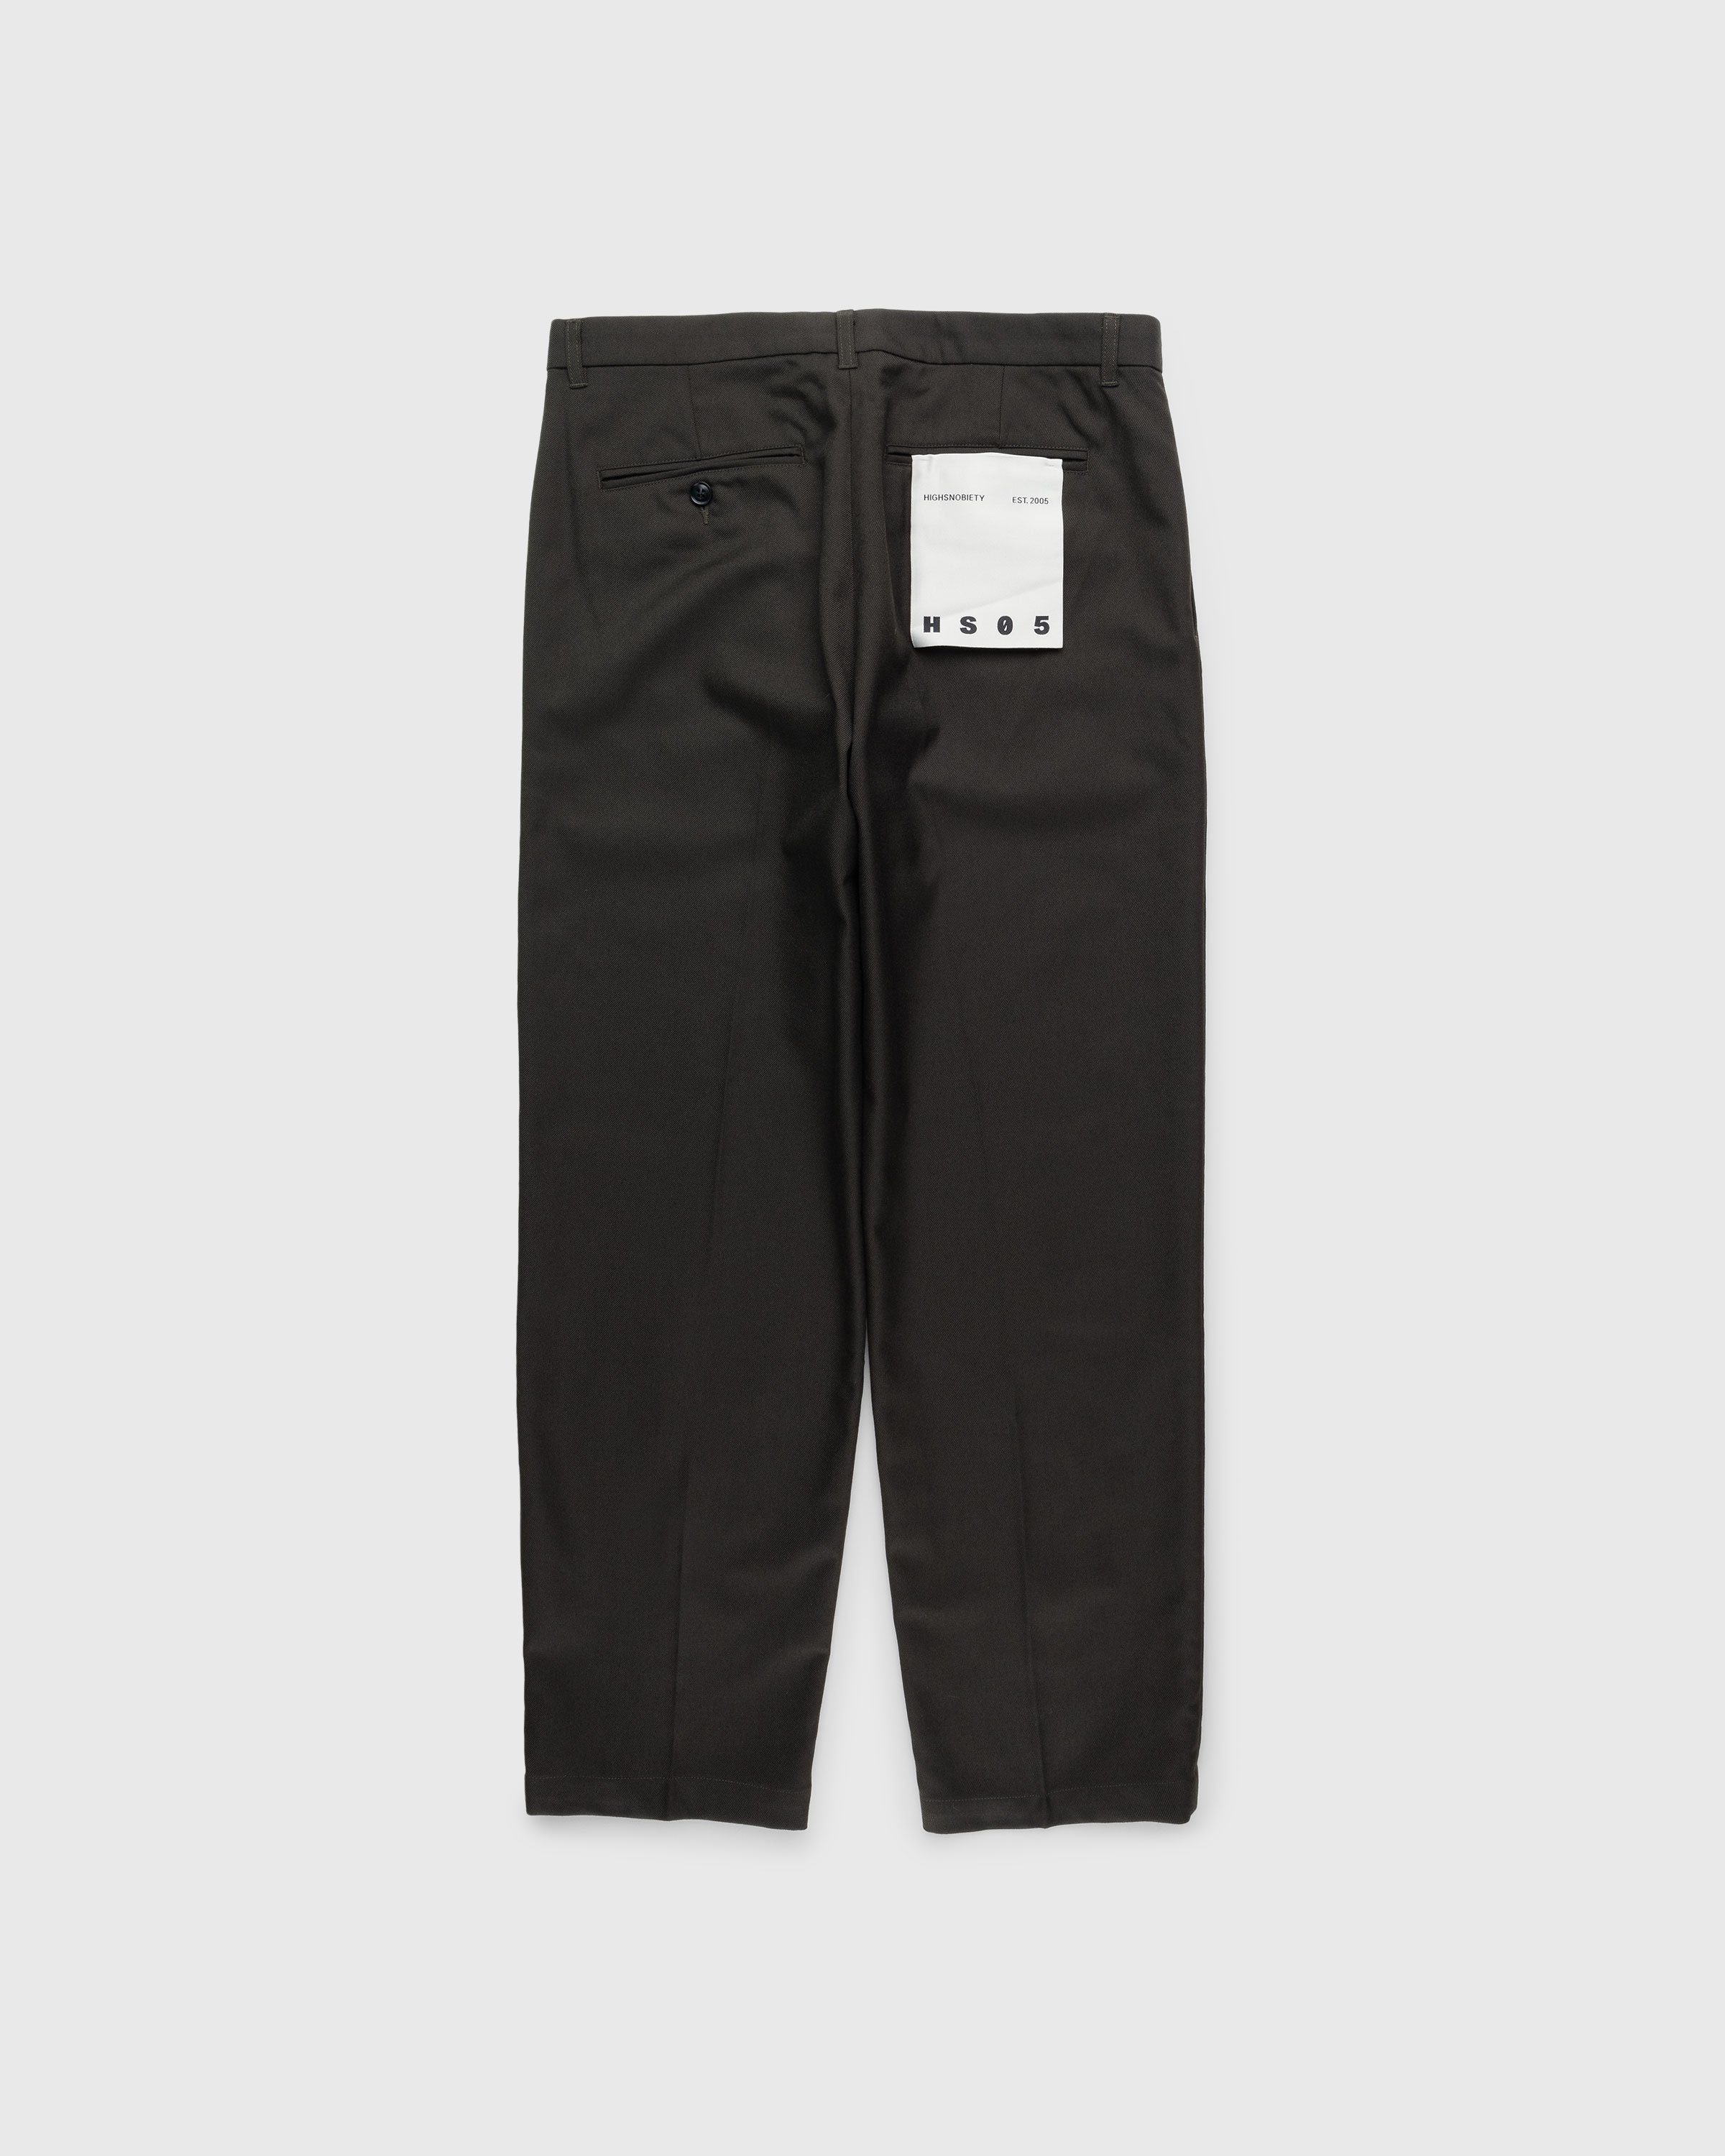 Highsnobiety HS05 – Wool Dress Pants Dark Gray - Pants - Grey - Image 2